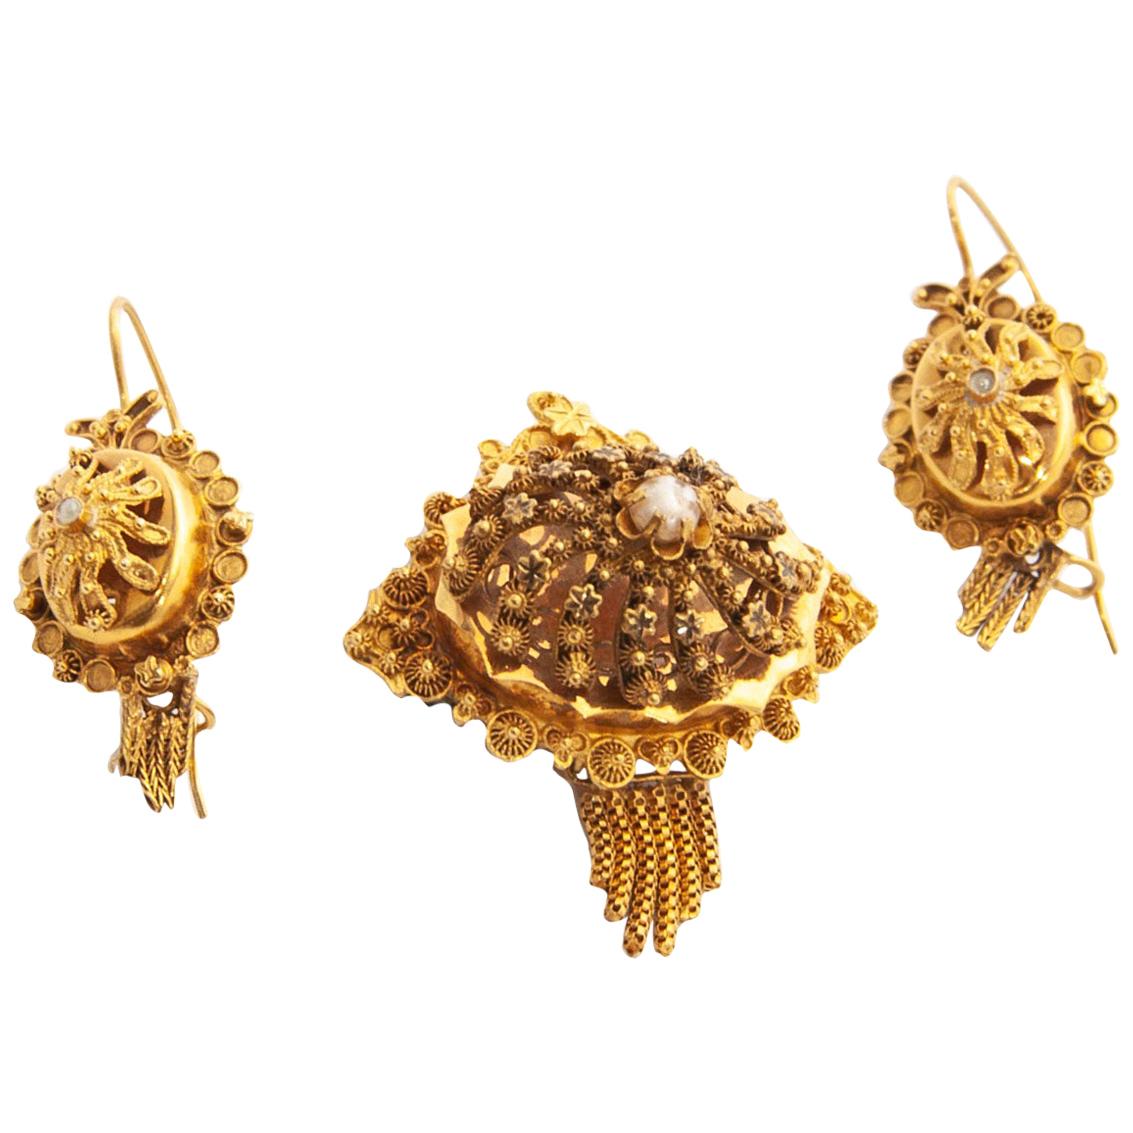 Antique 14K Gold Tassel Earrings and Brooch, Jewelry Set